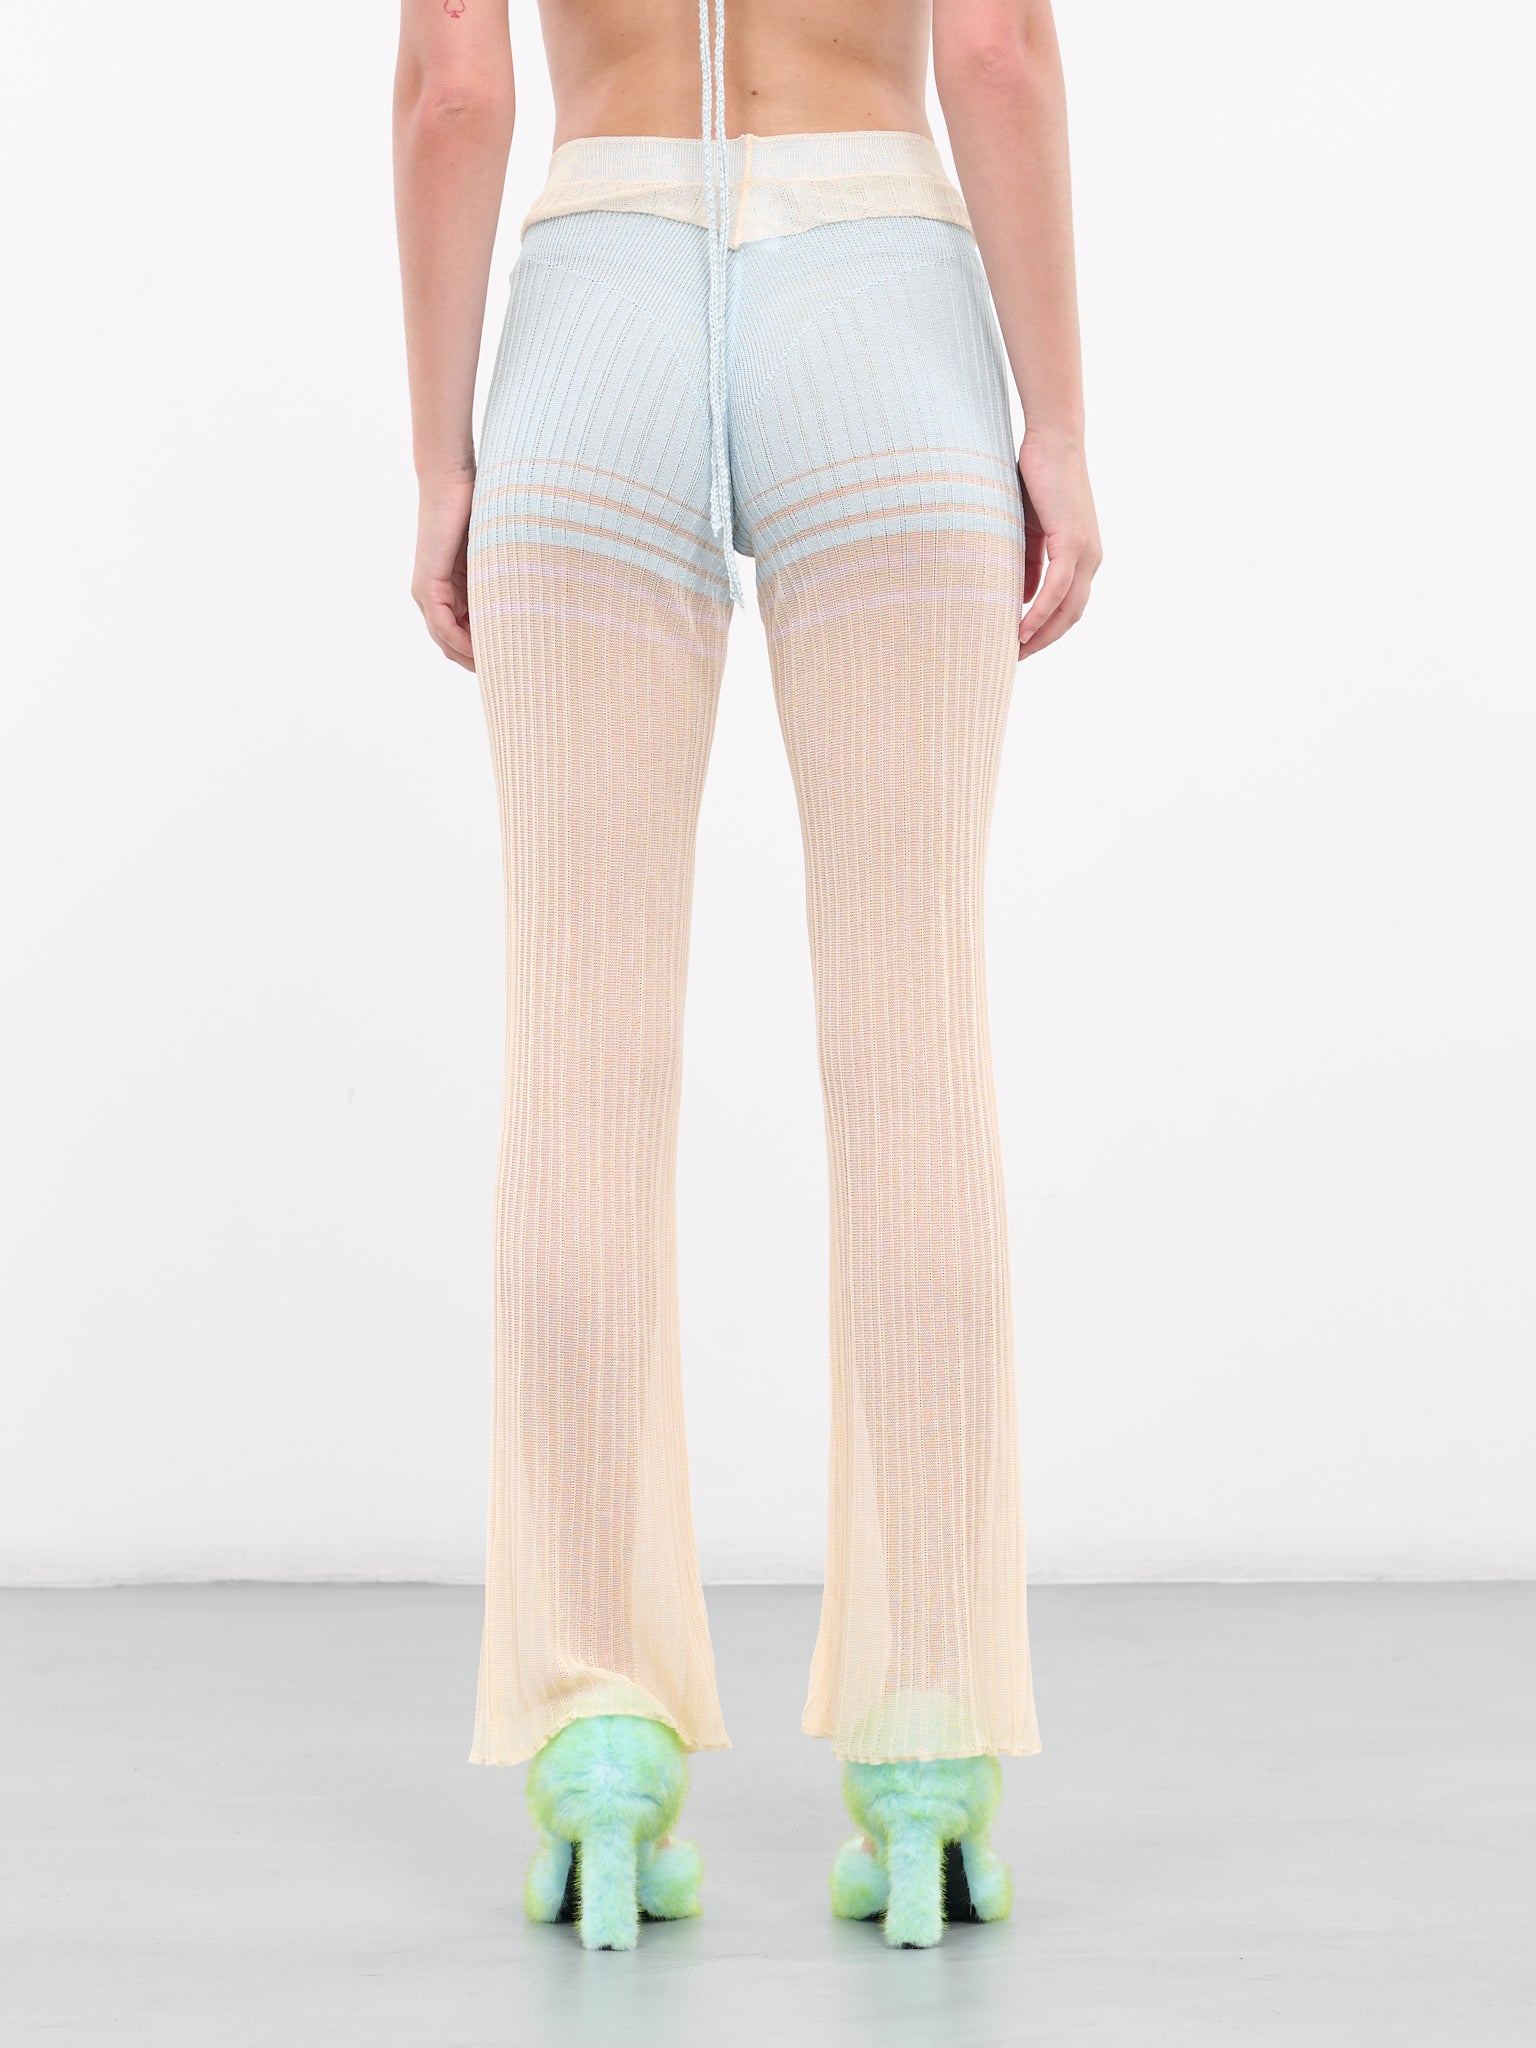 Sheer Knit Pants (P0101-BLUE-CREAM)